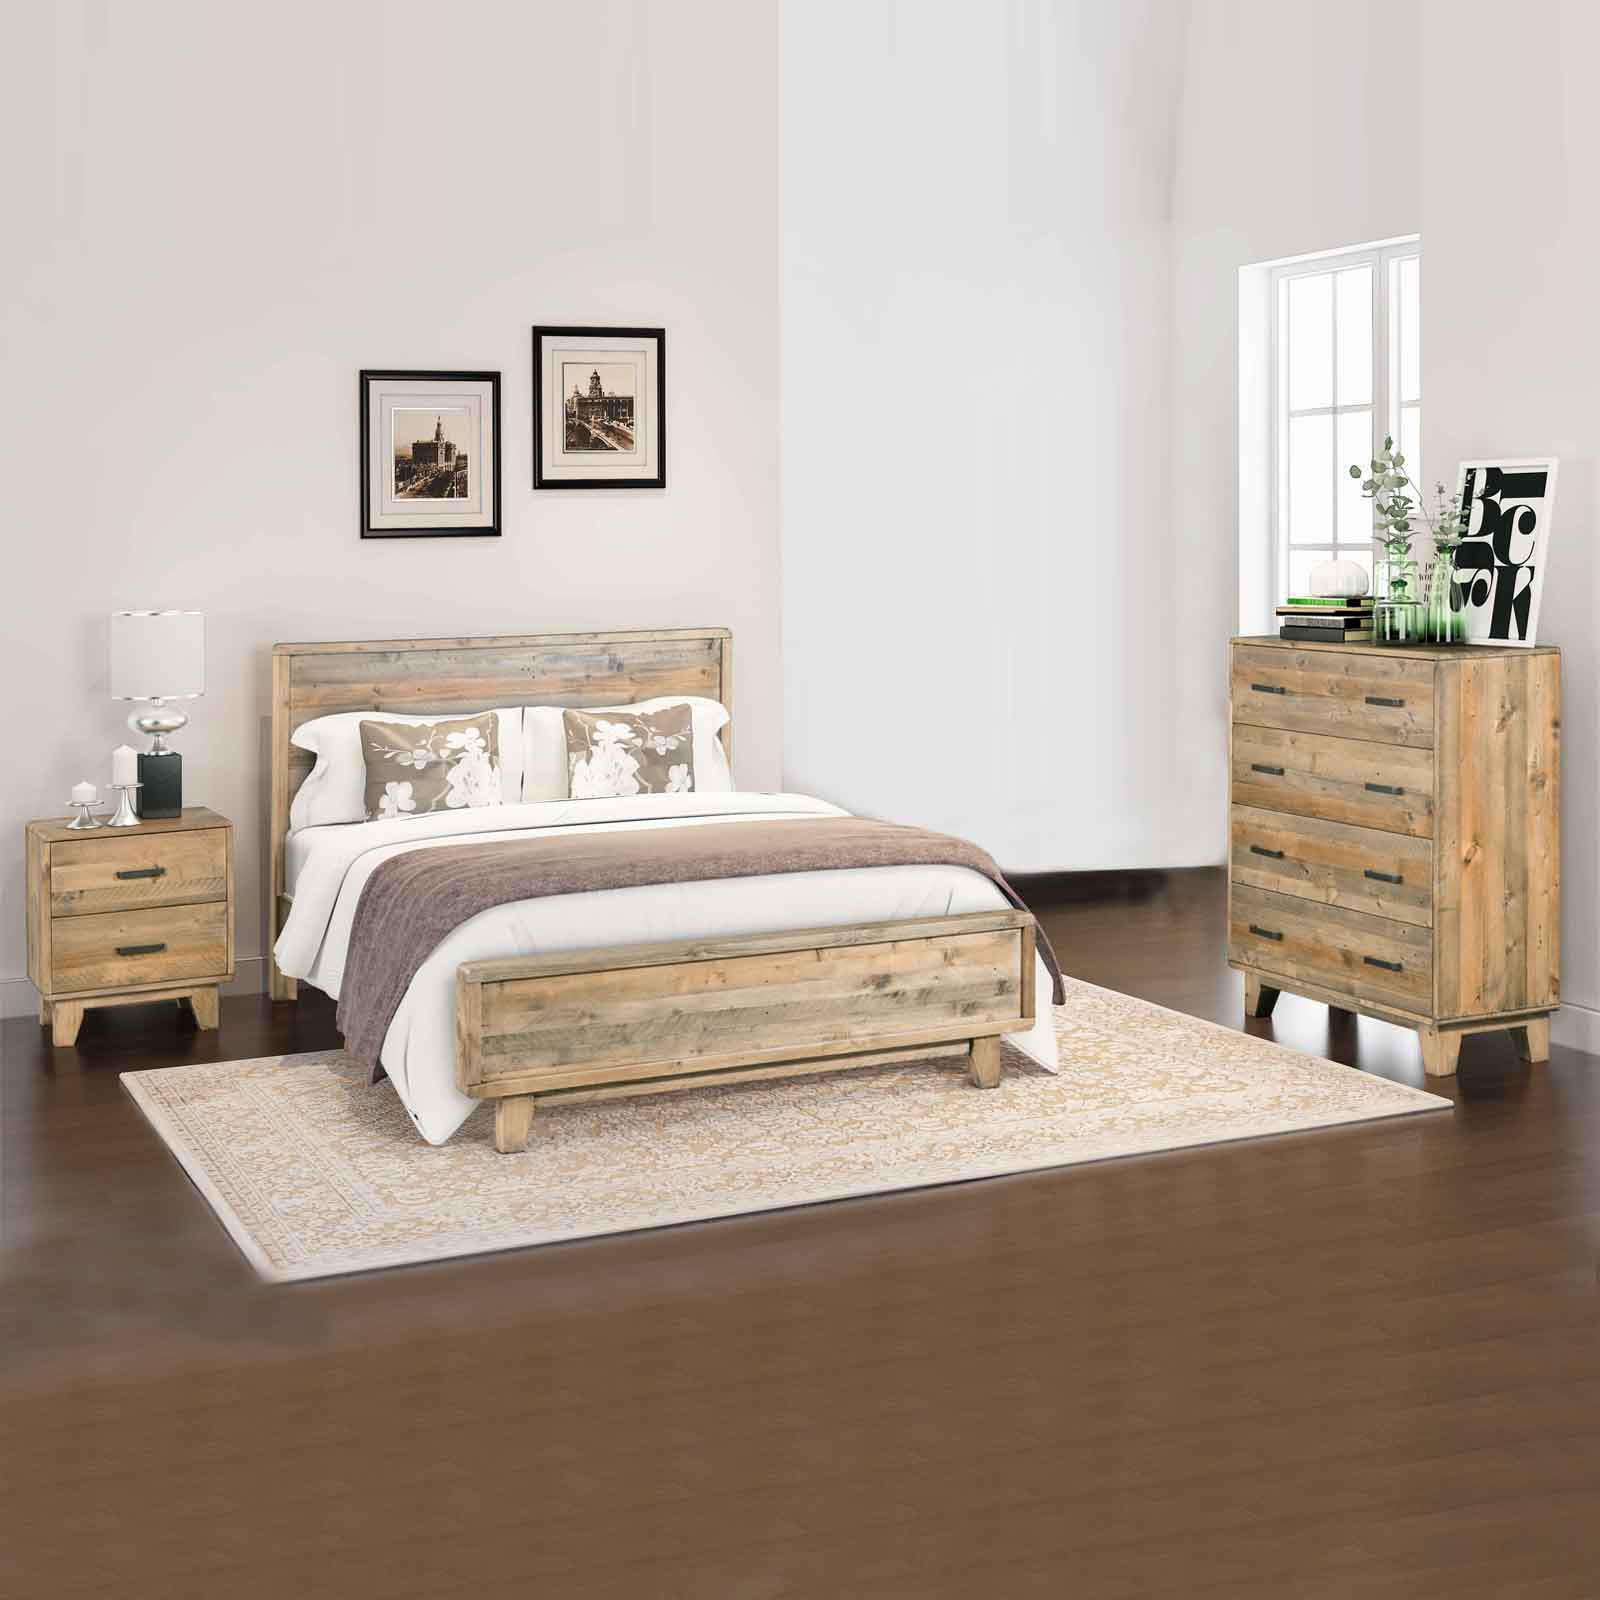 Wesley 4 Pieces Bedroom Suite Double Size in Solid Wood Antique Design Light Brown Bed, Bedside Tabl